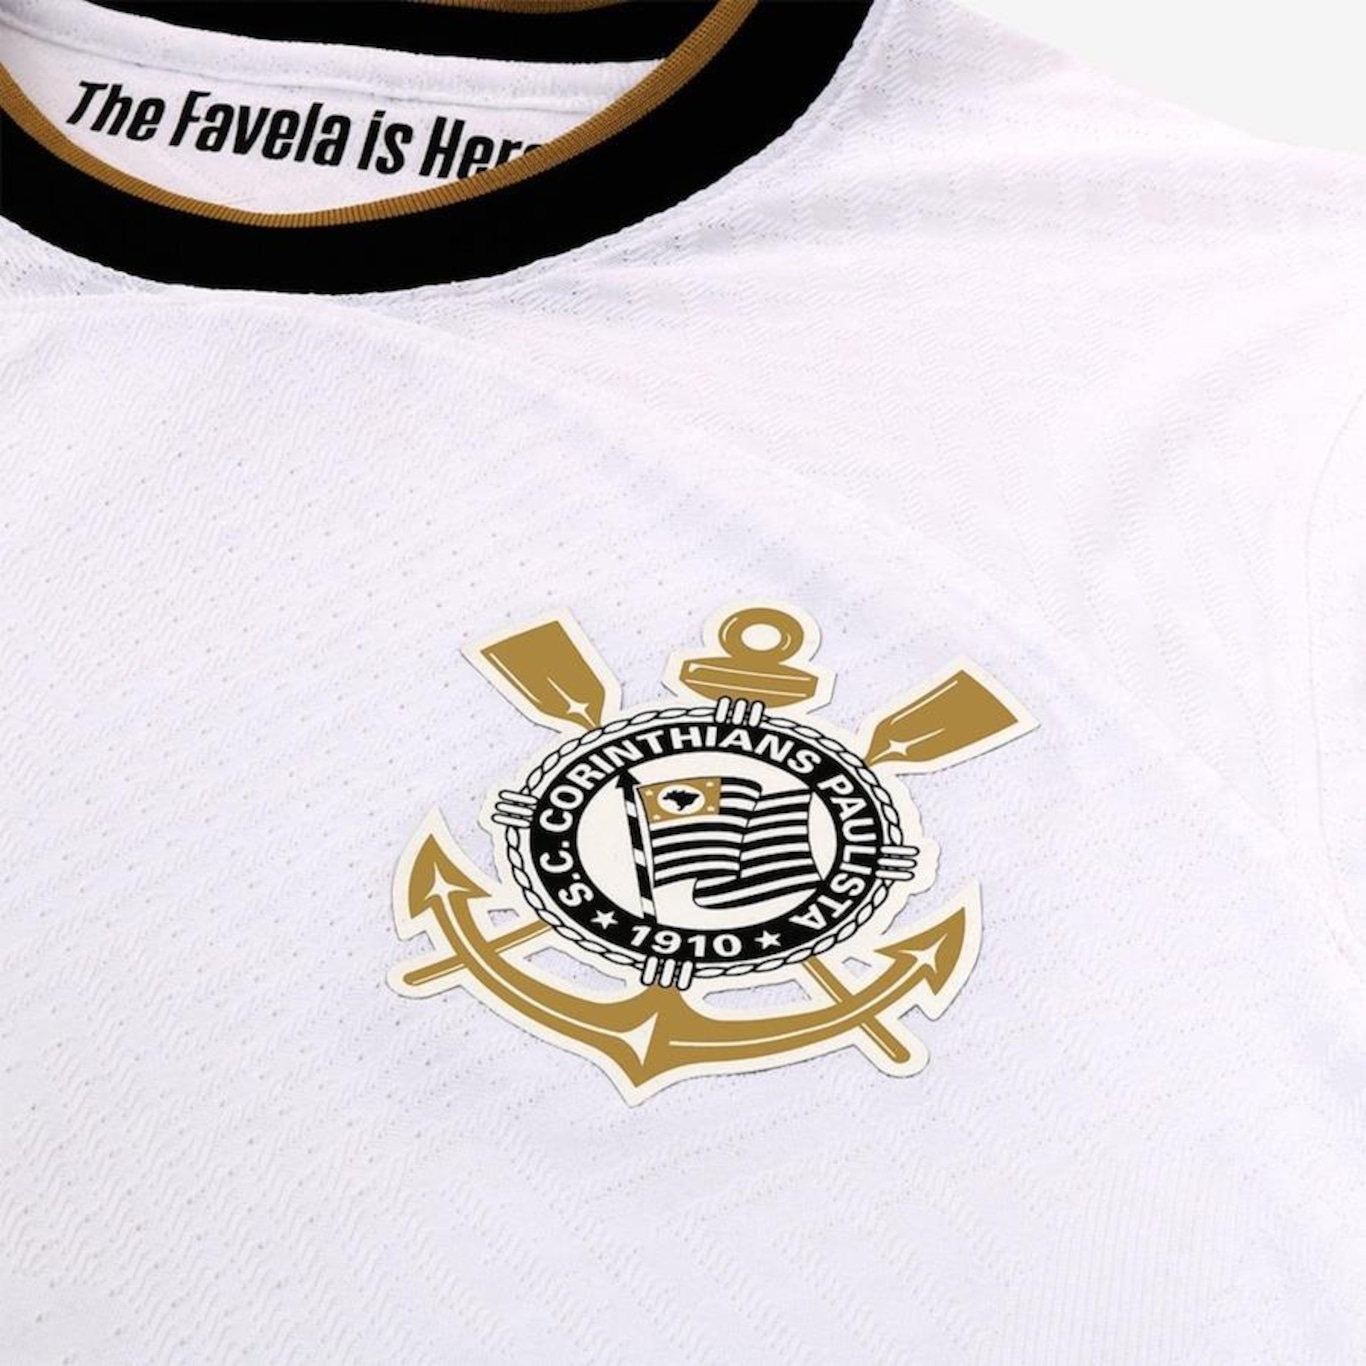 Camisa Camiseta Internacional Torcida Favela Personalizada